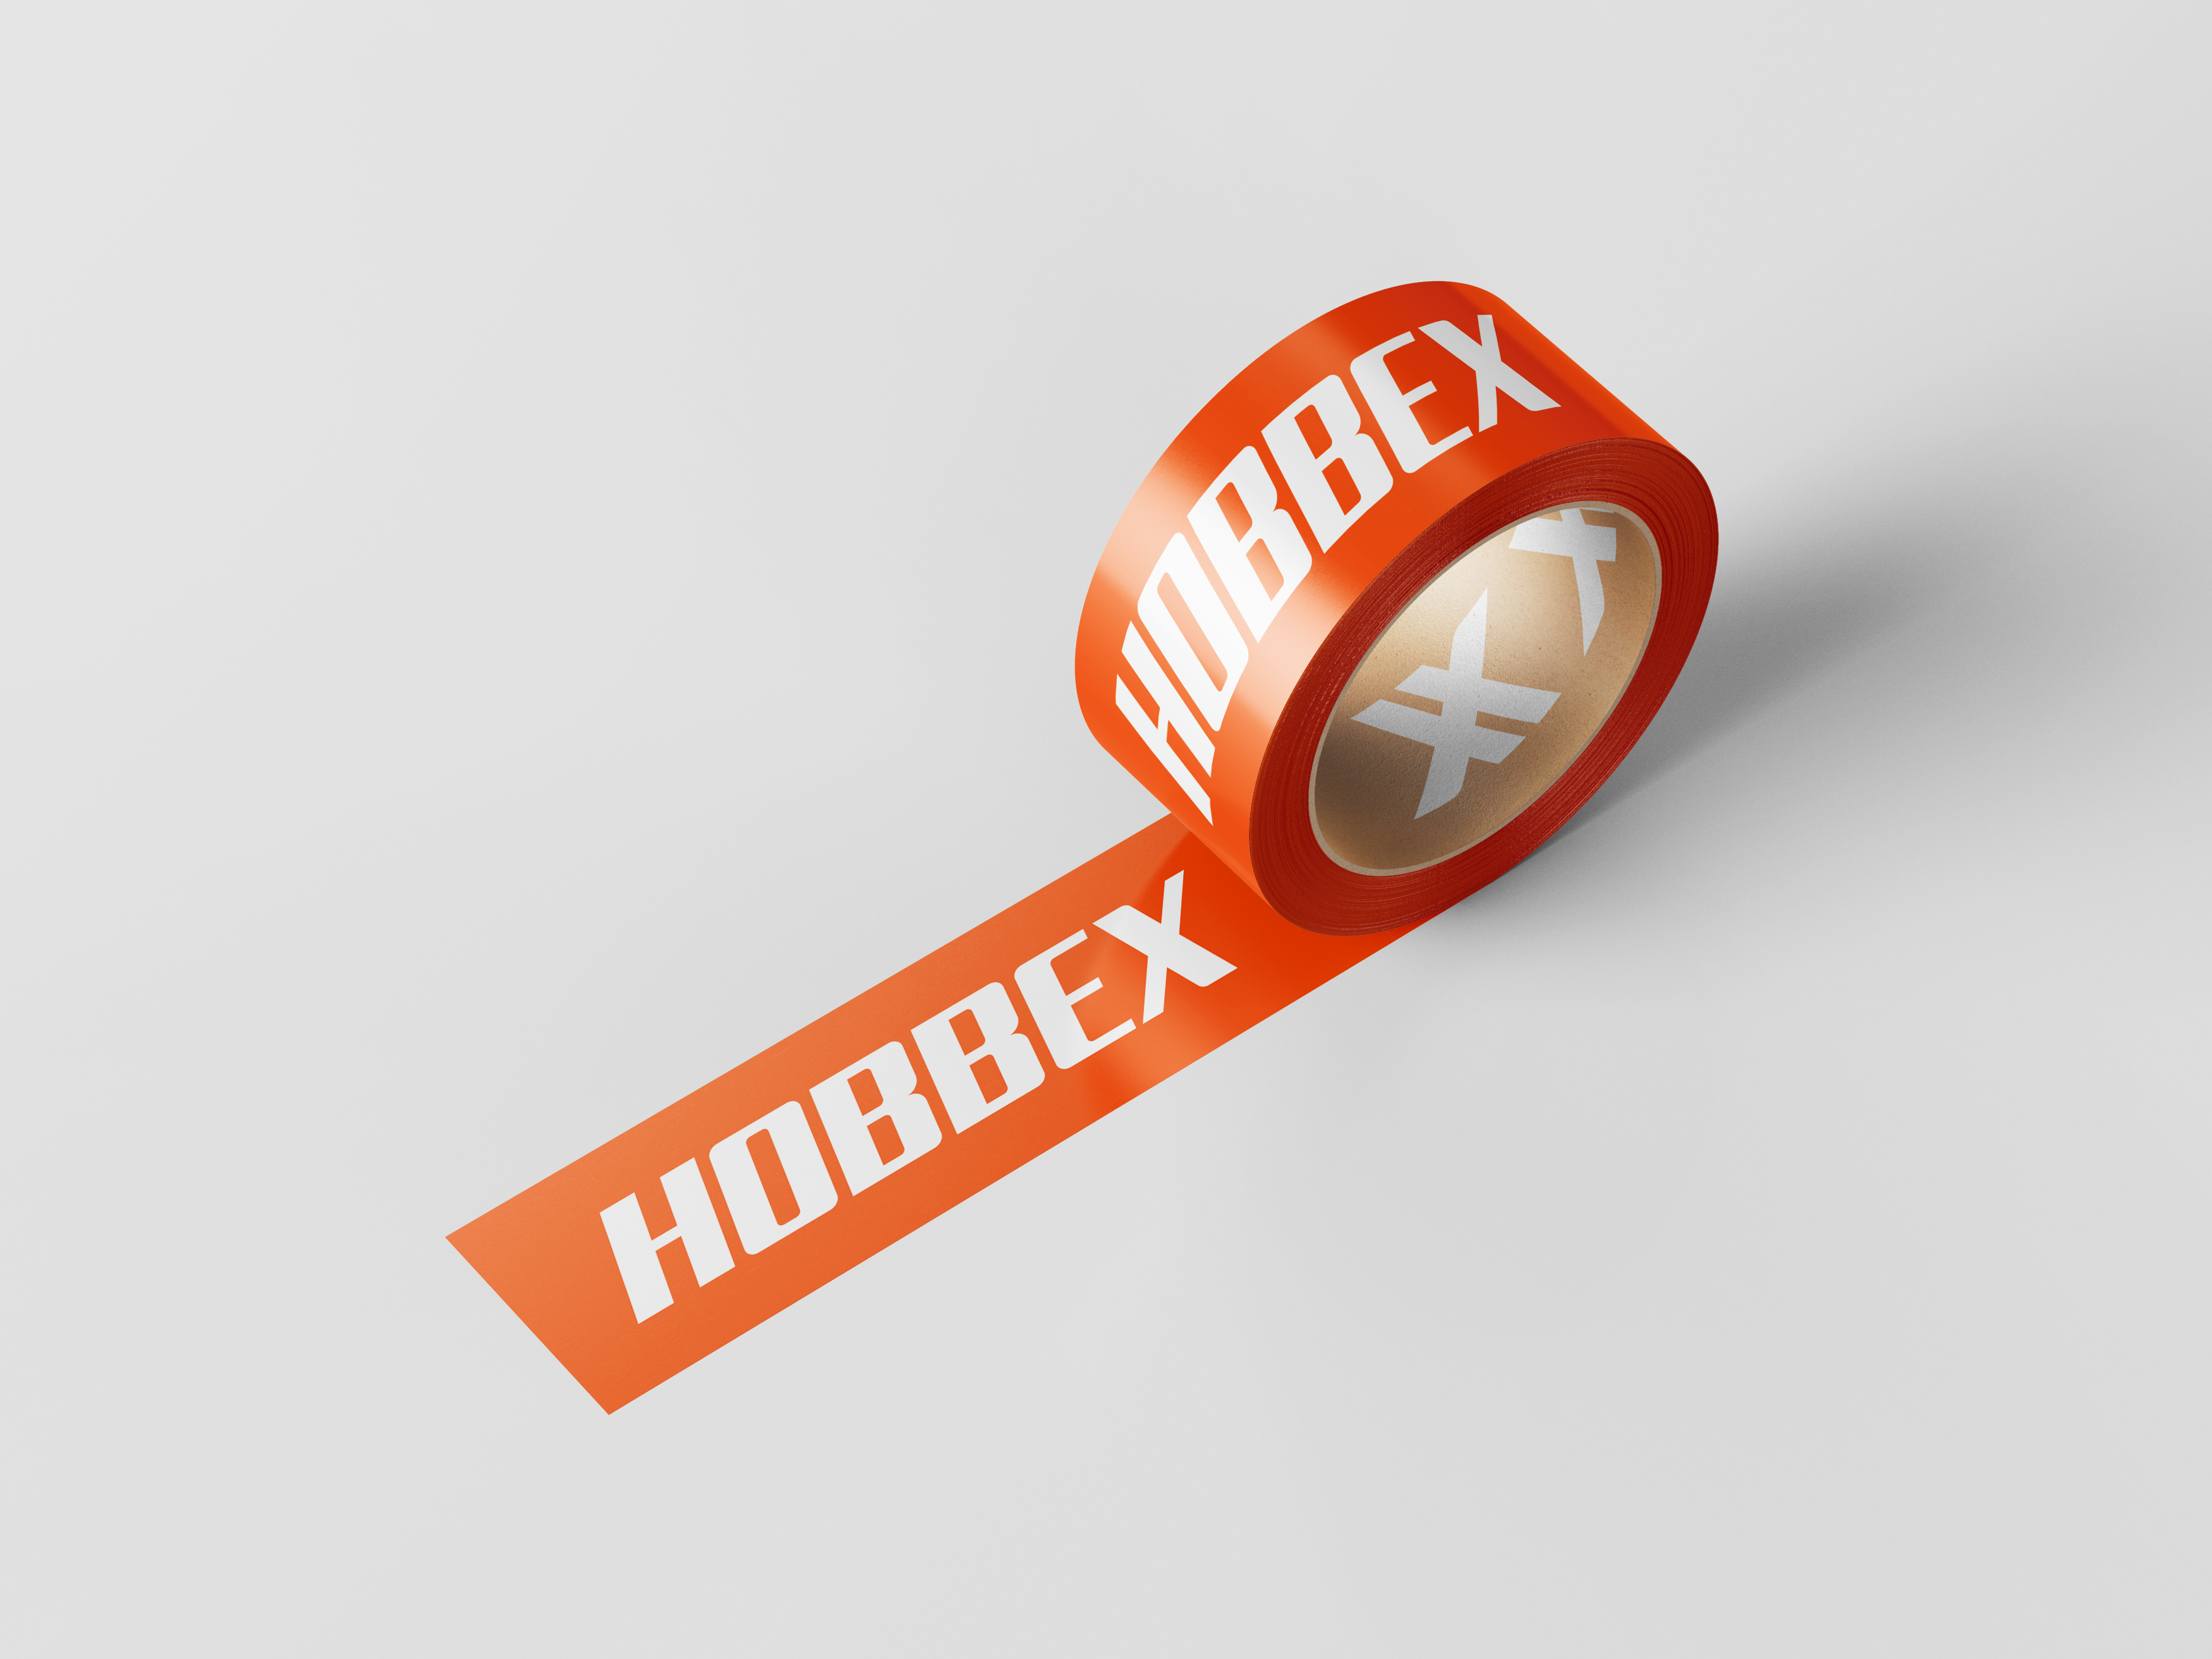 Hobbex / Brand Identity